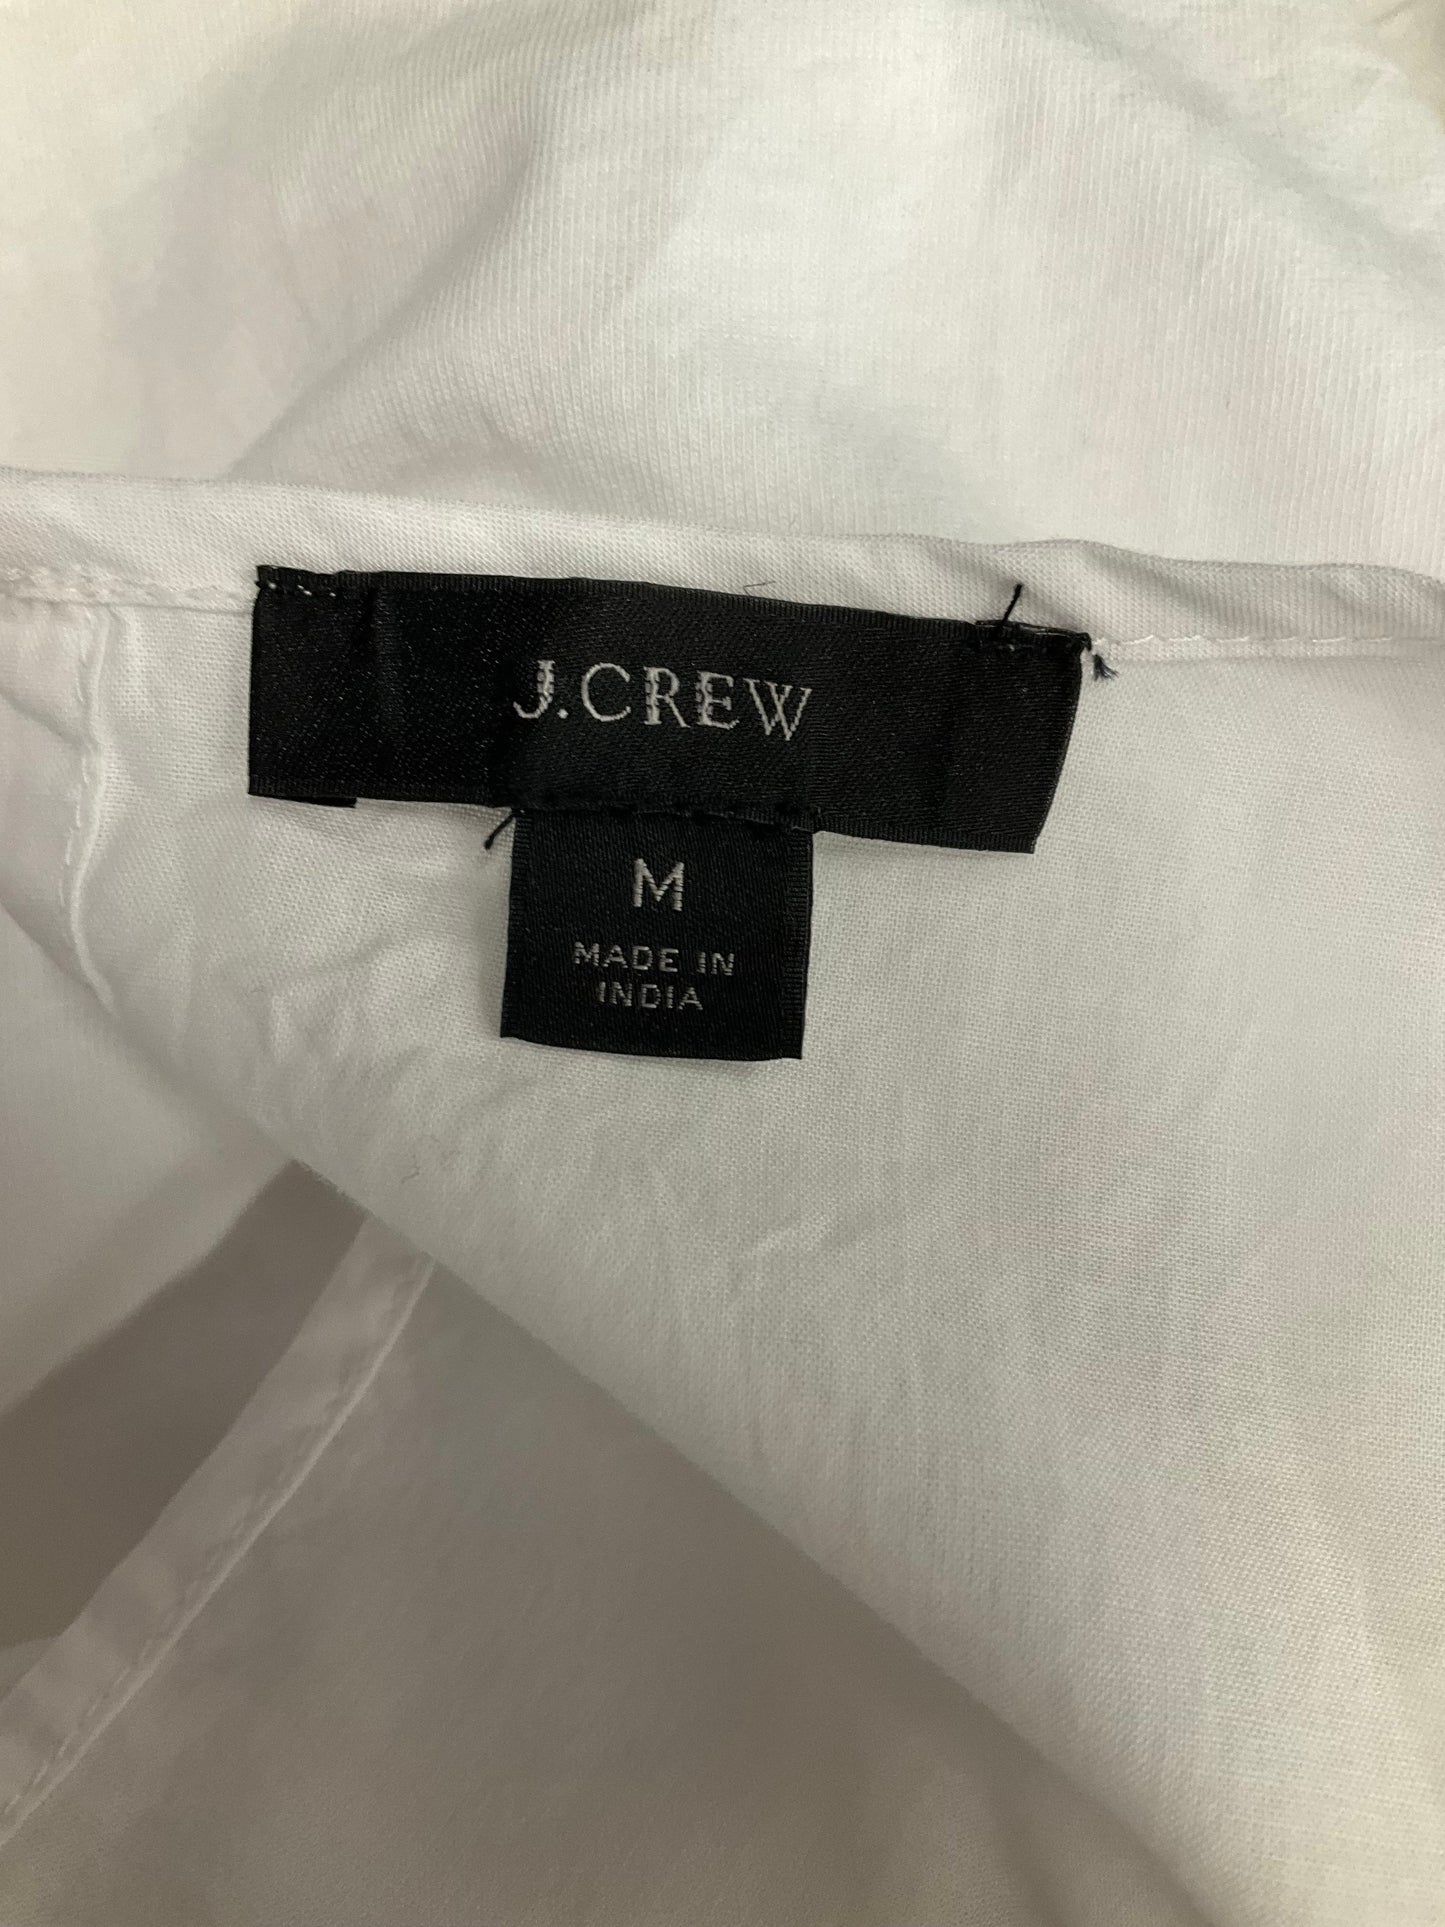 White Top 3/4 Sleeve J. Crew, Size M